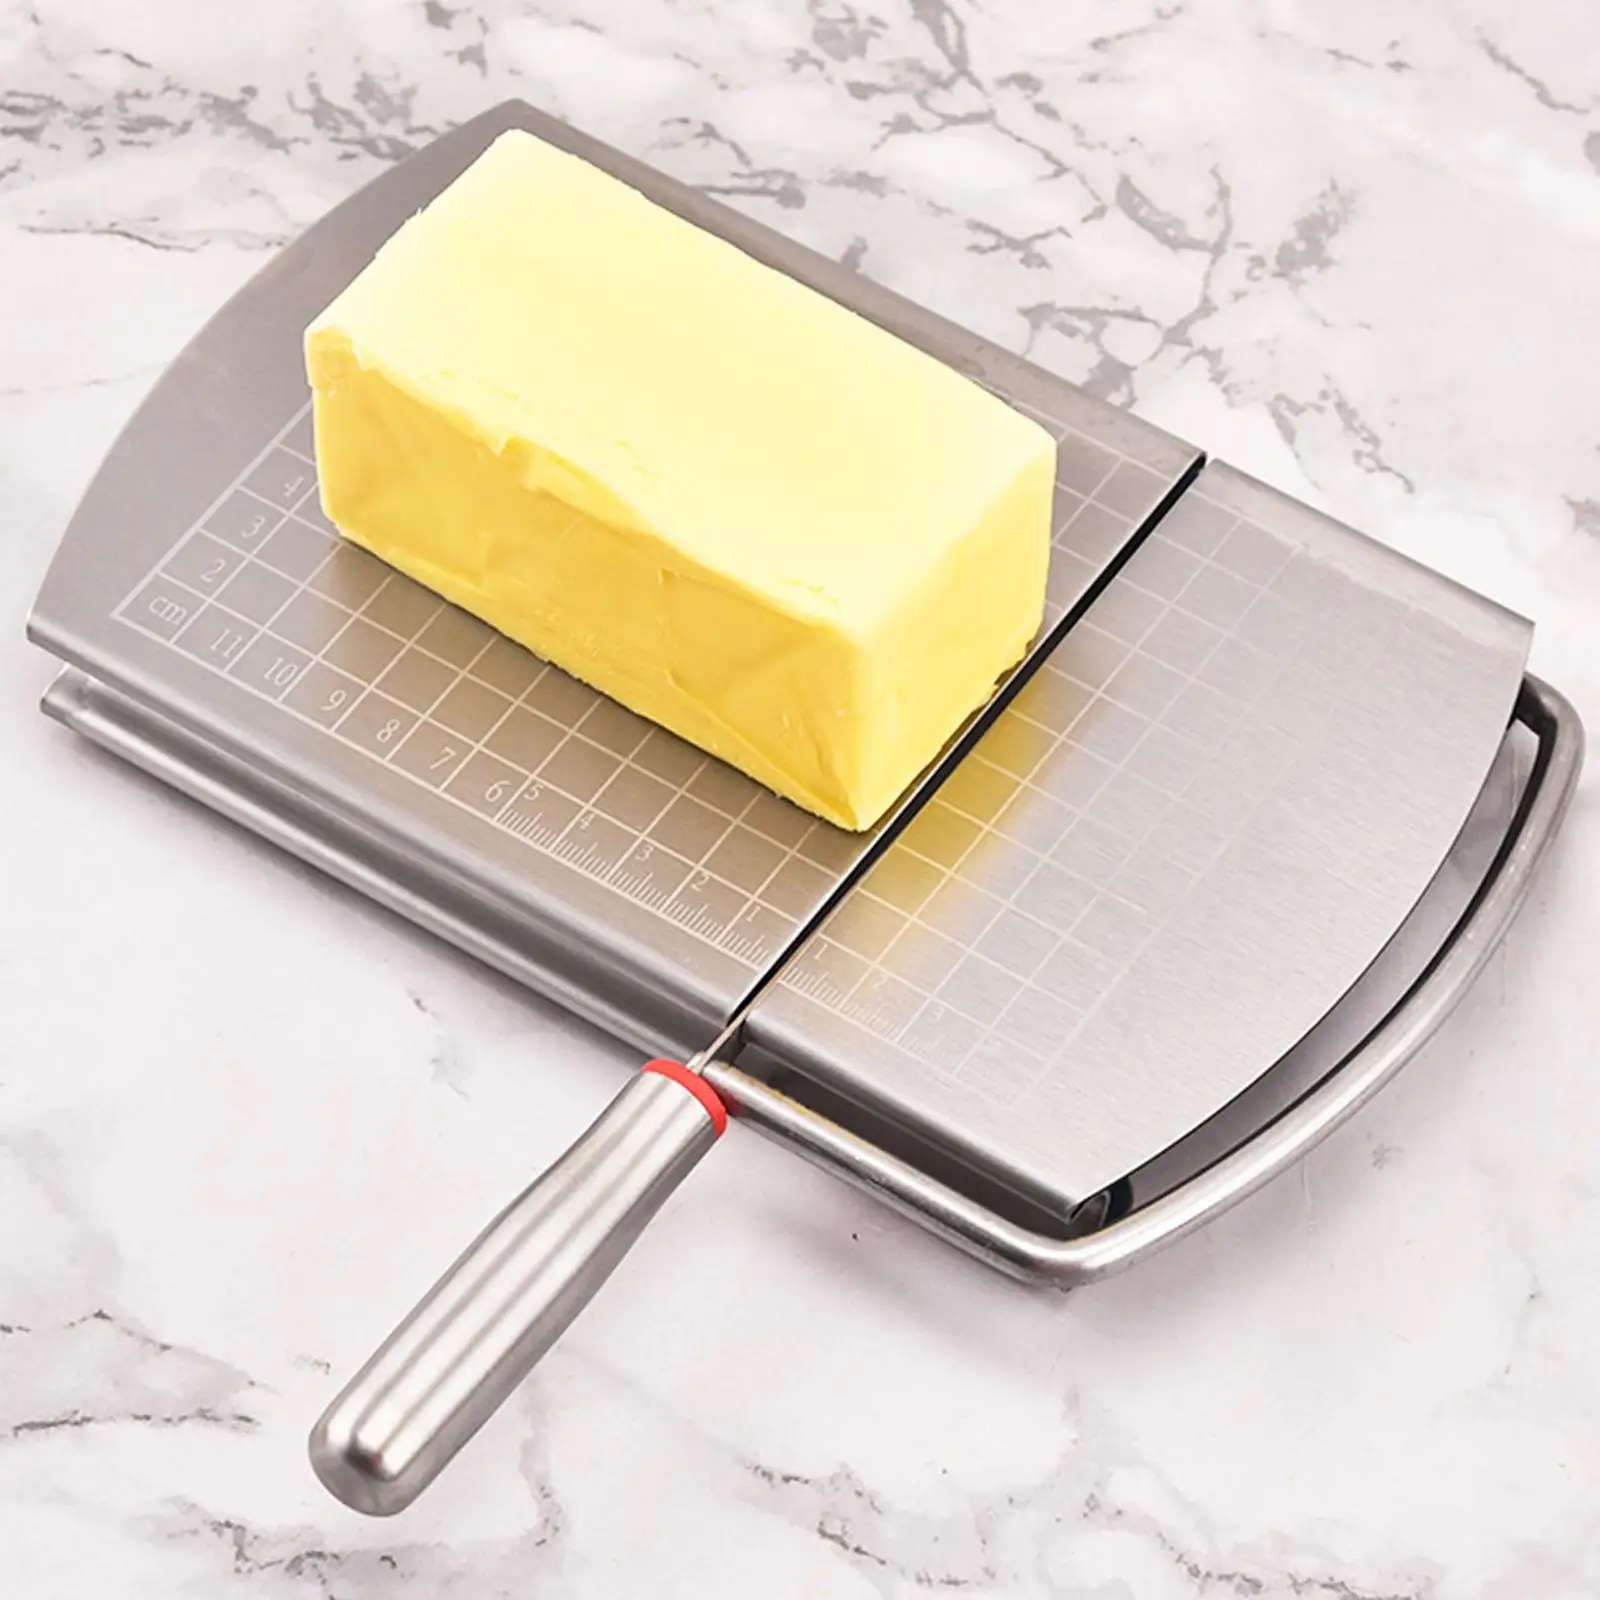 Stainless Steel Cheese Slicer Gift Heavy Duty Cheese Slicer Cutting Board Cheese Cutter for Kitchen Home Cafe Bar Restaurant